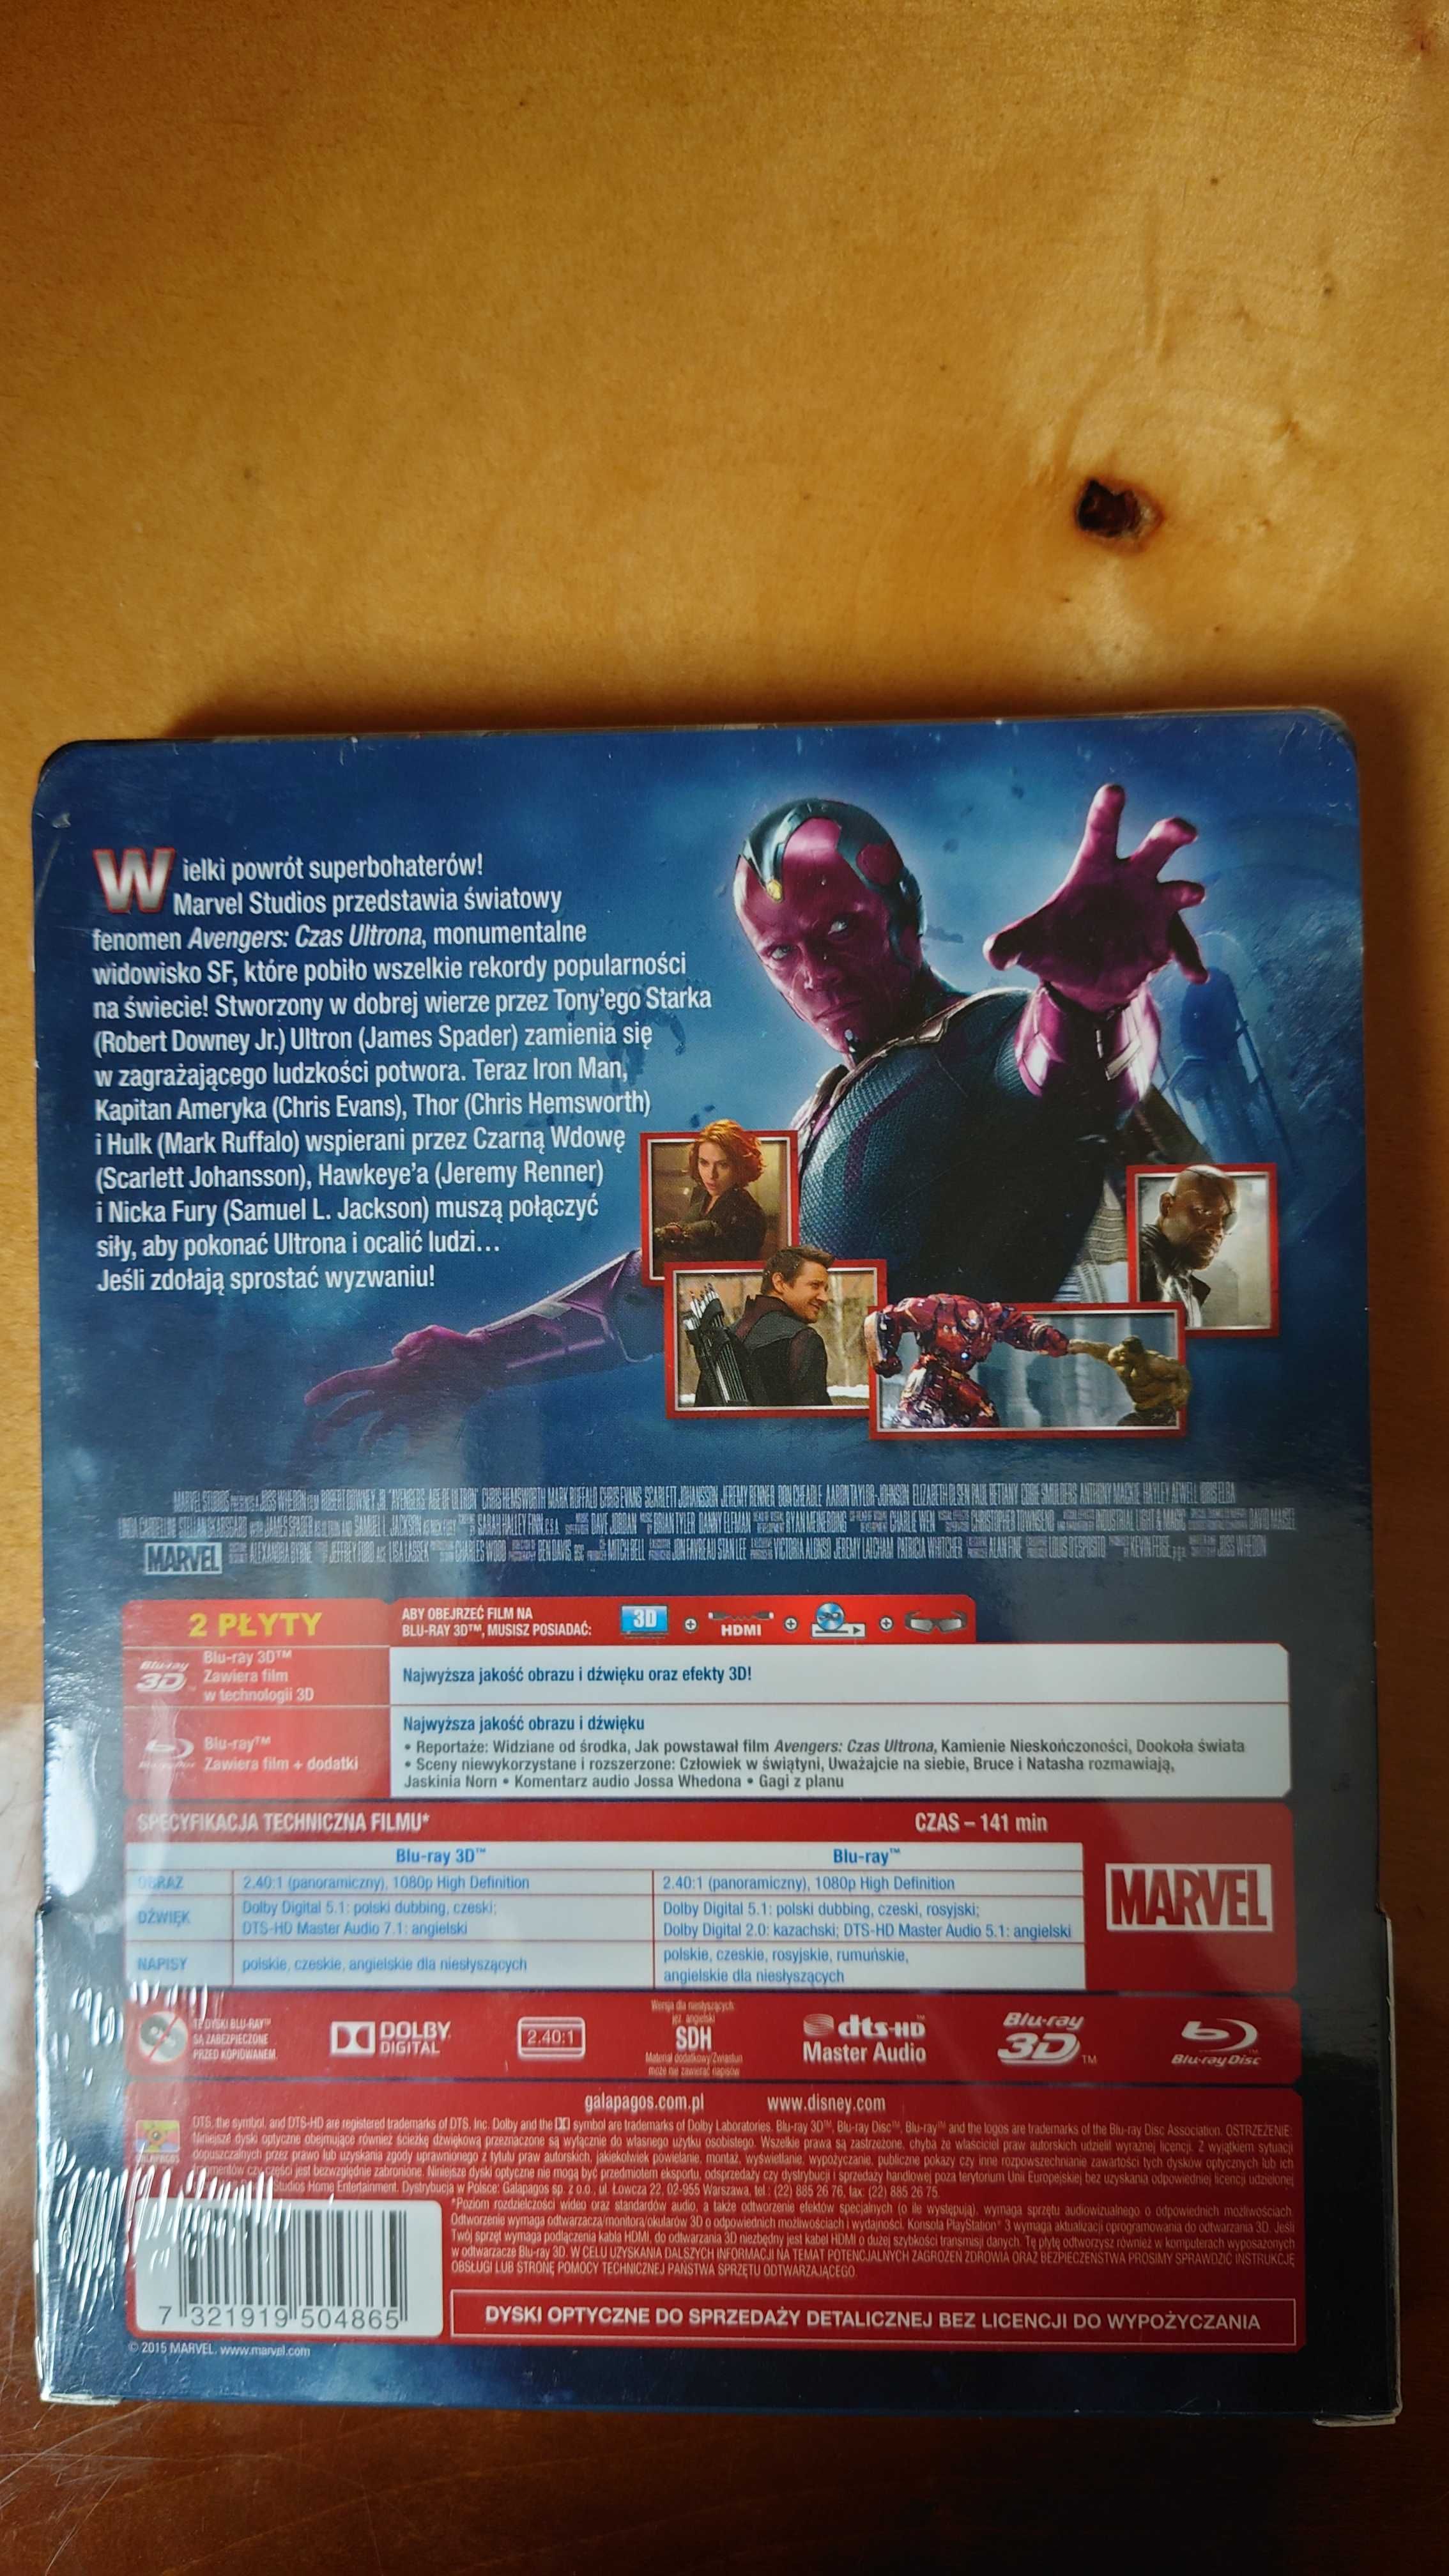 MCU - Avengers - Czas Ultrona - Blu-Ray - Steelbook